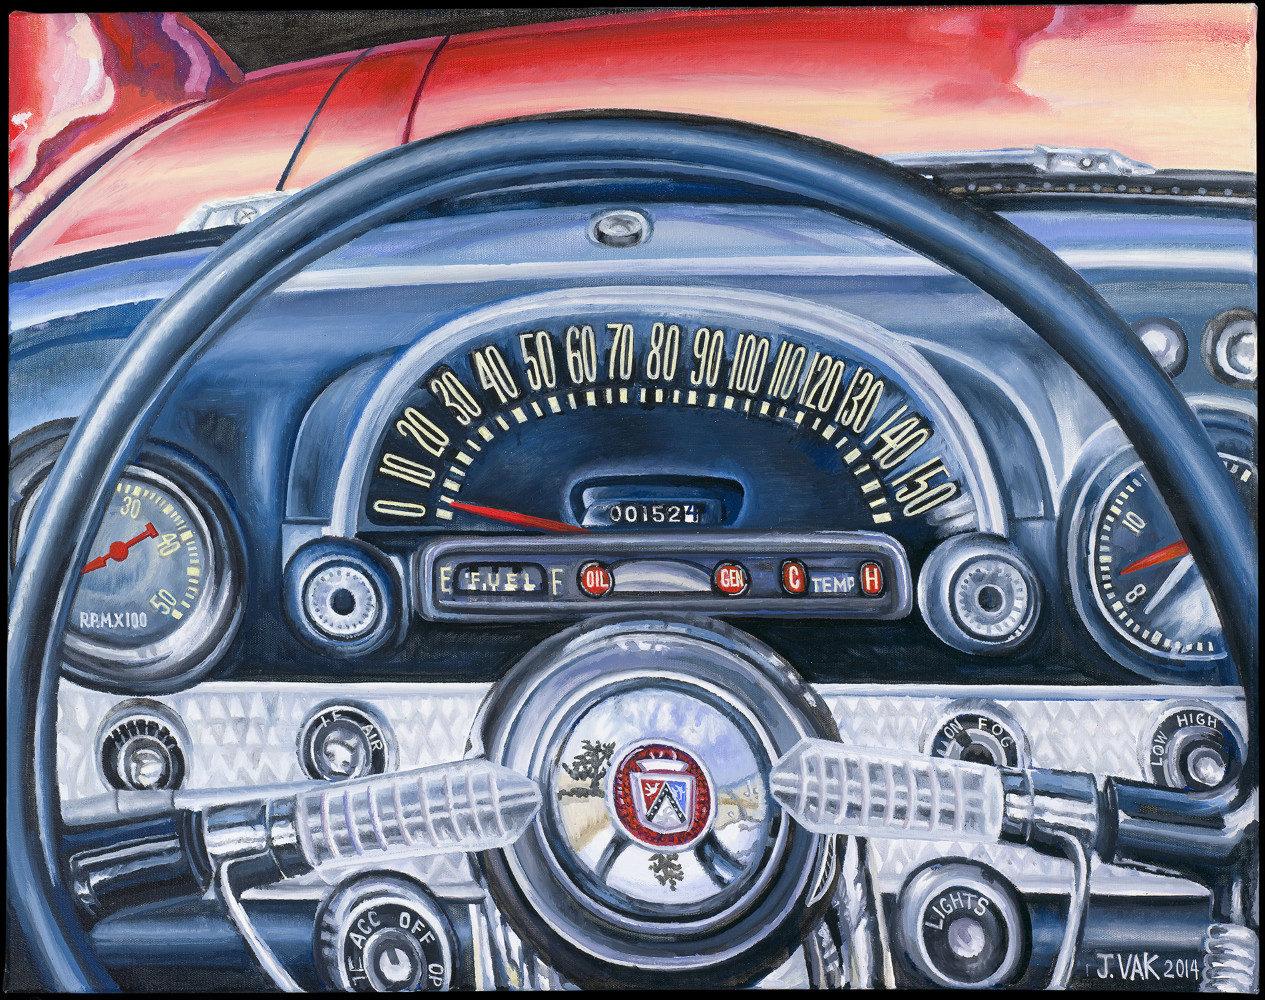 1957 Ford Thunderbird Interior
          24x28 Original Oil
                  $3500
                   2014
